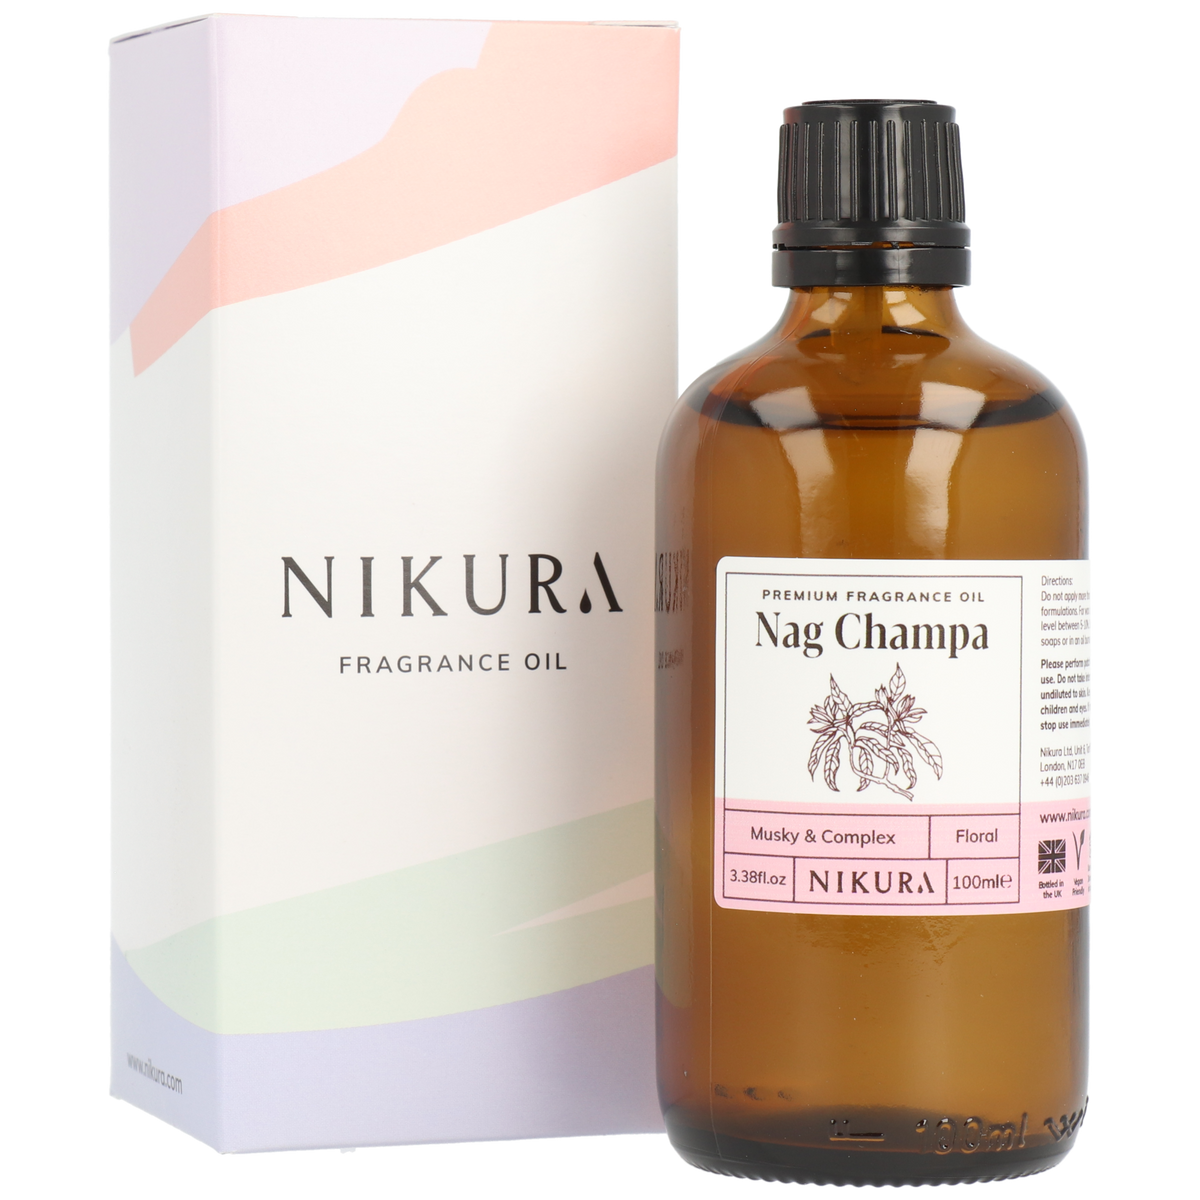 Nag Champa Fragrance Oil – Wellington Fragrance